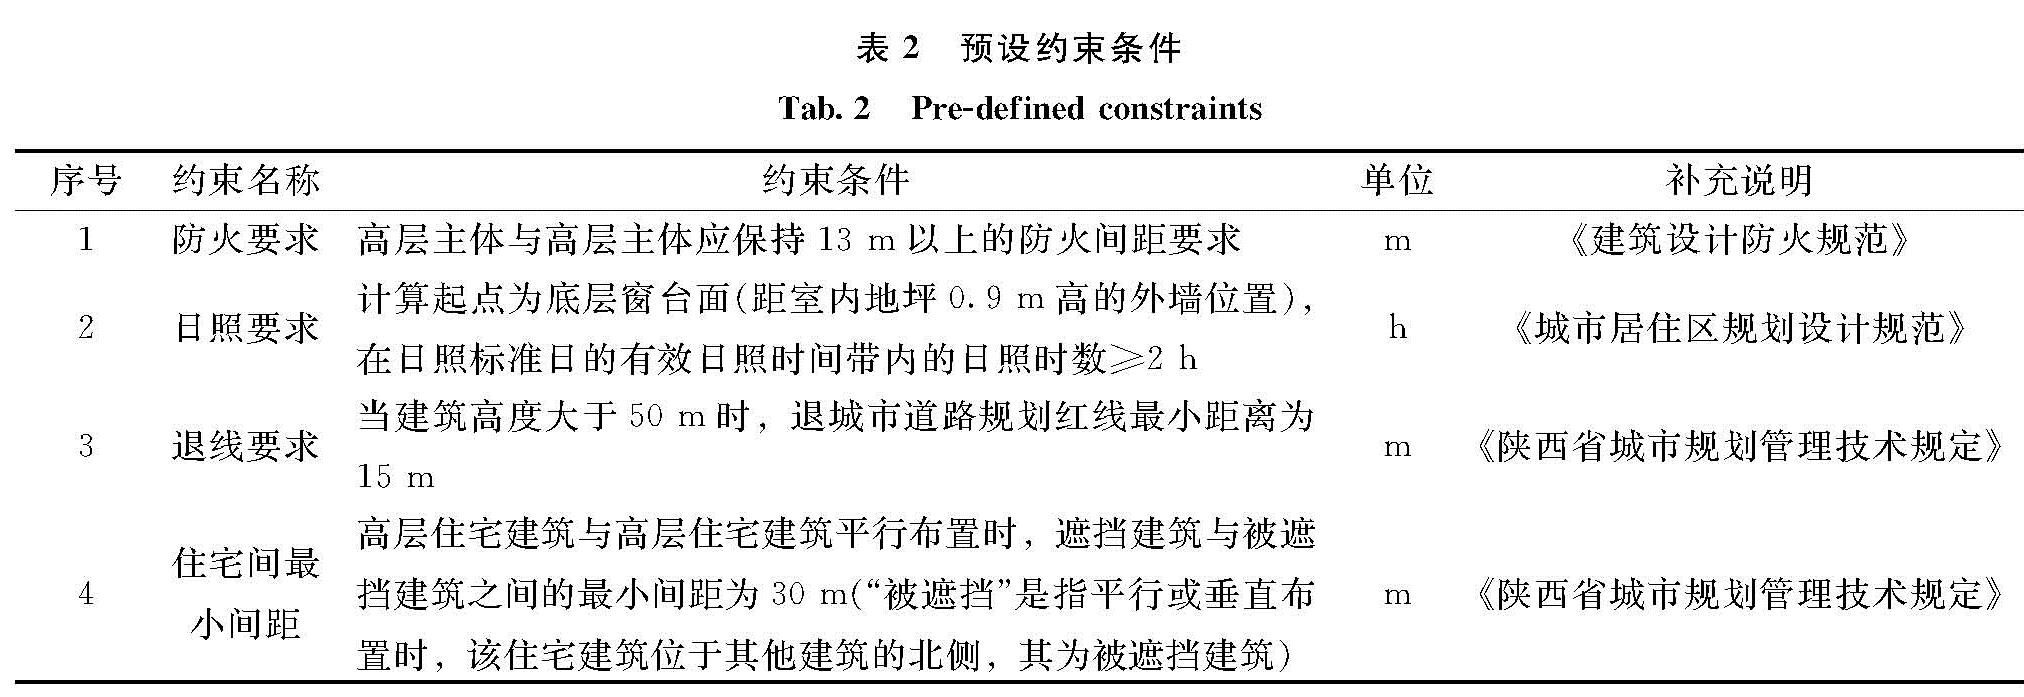 表2 预设约束条件<br/>Tab.2 Pre-defined constraints